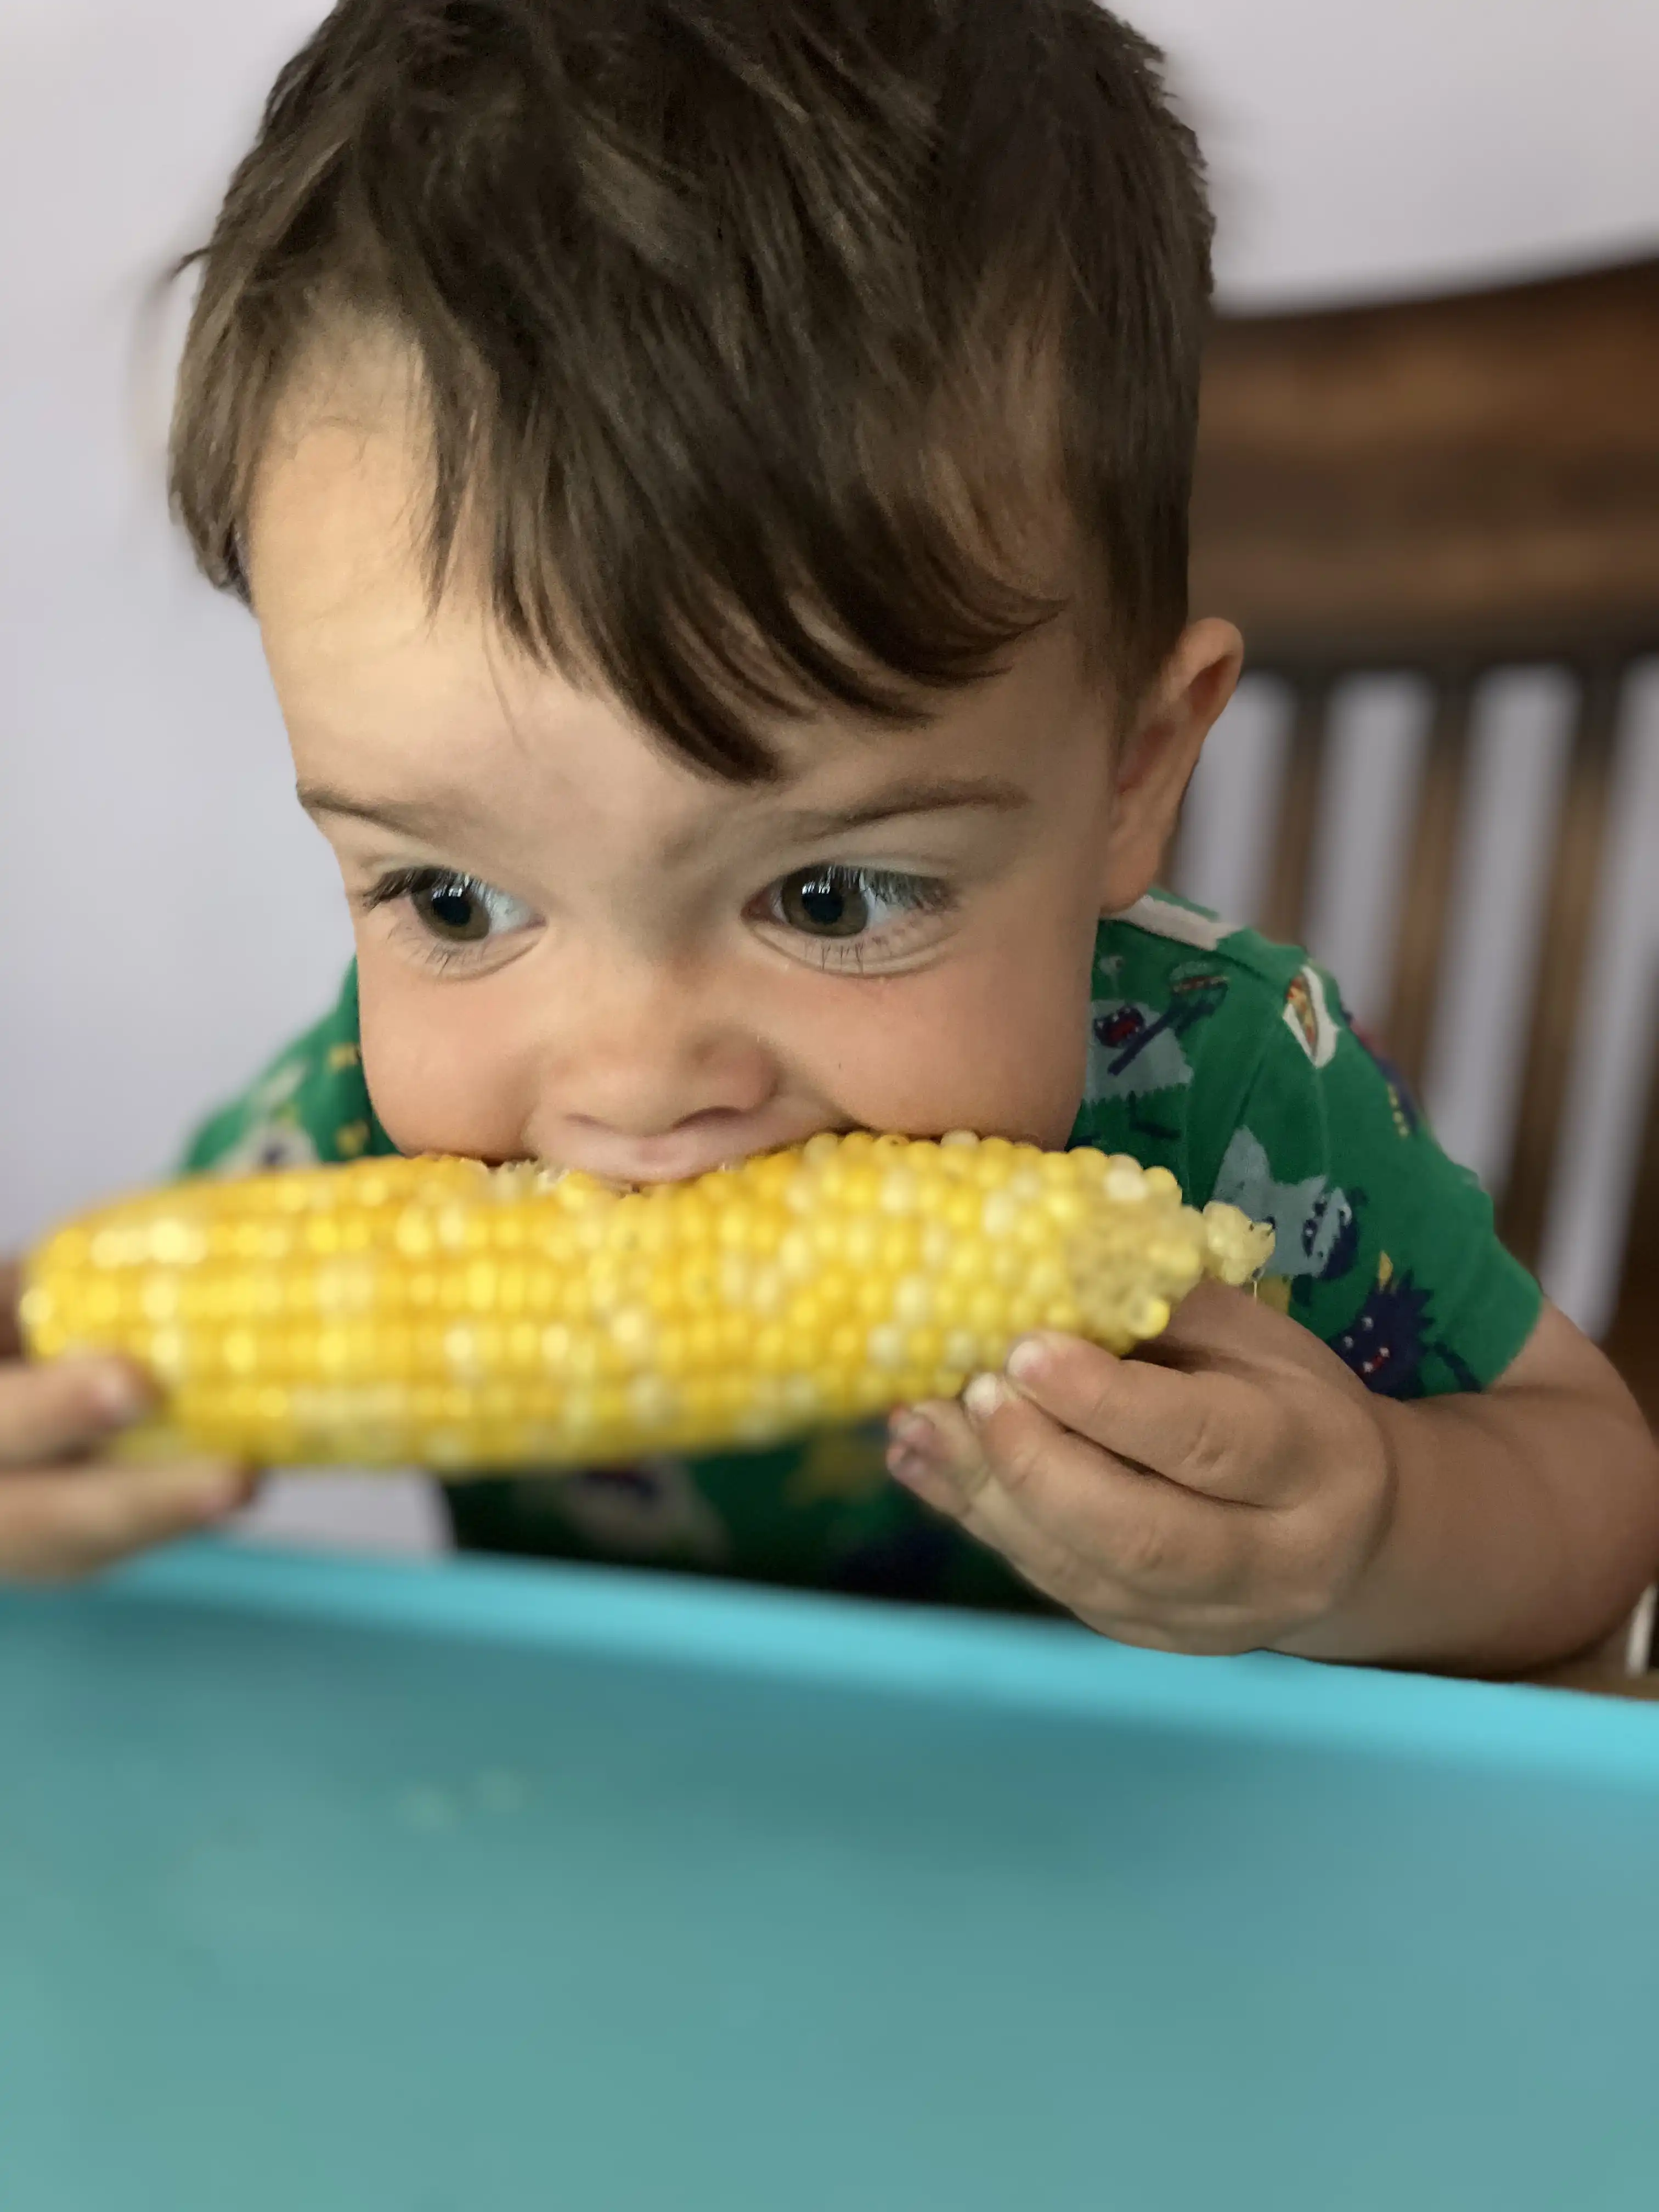 Royal furiously eating an ear of corn.